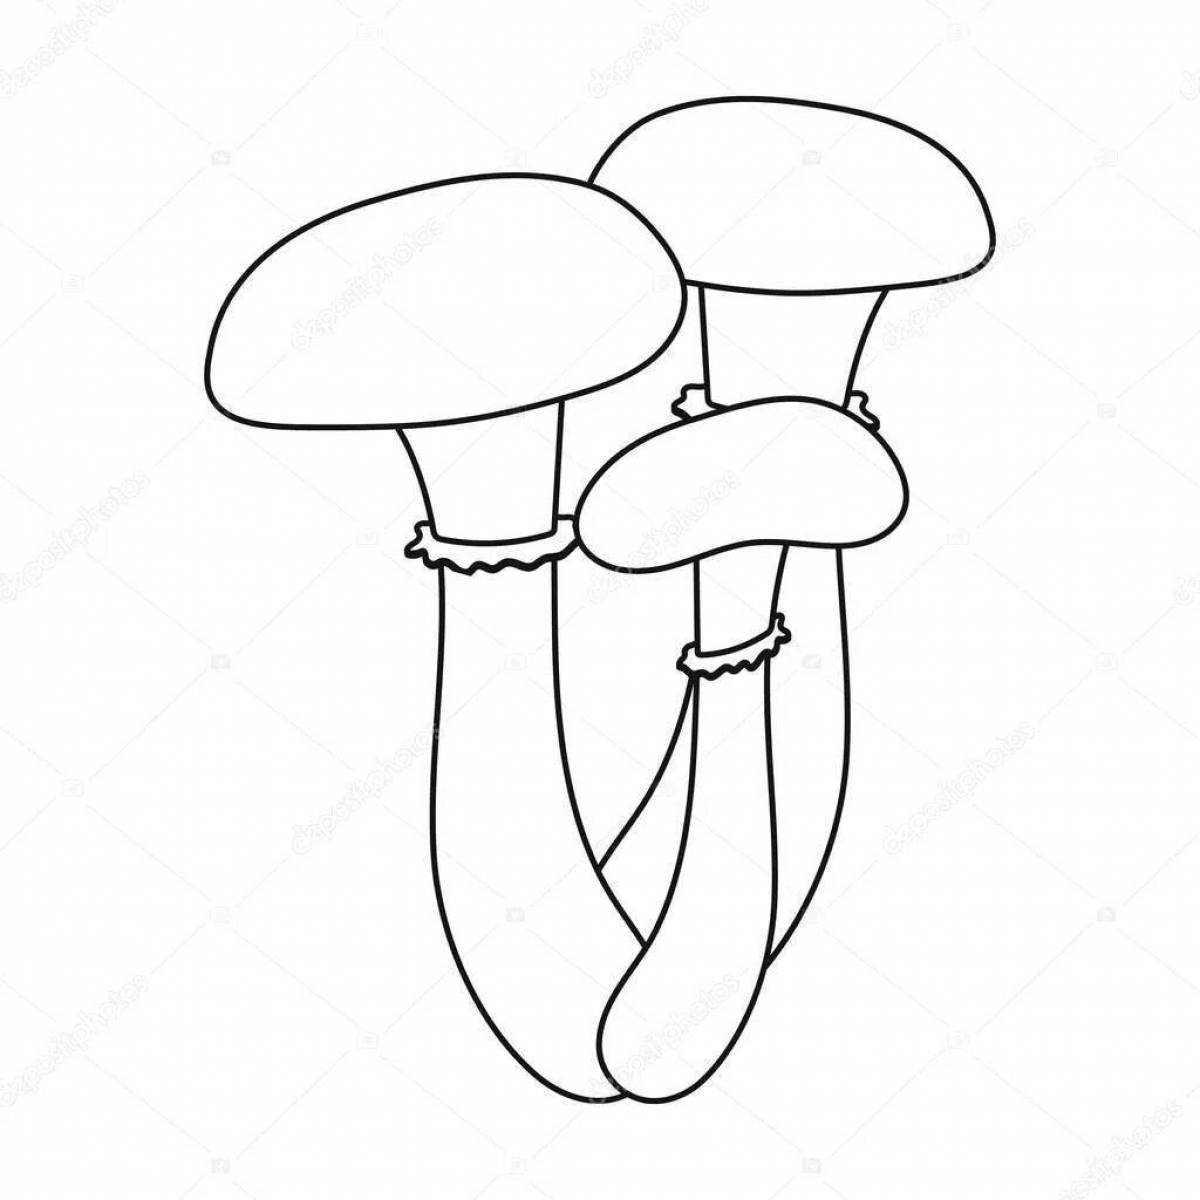 Glowing honey mushrooms coloring page